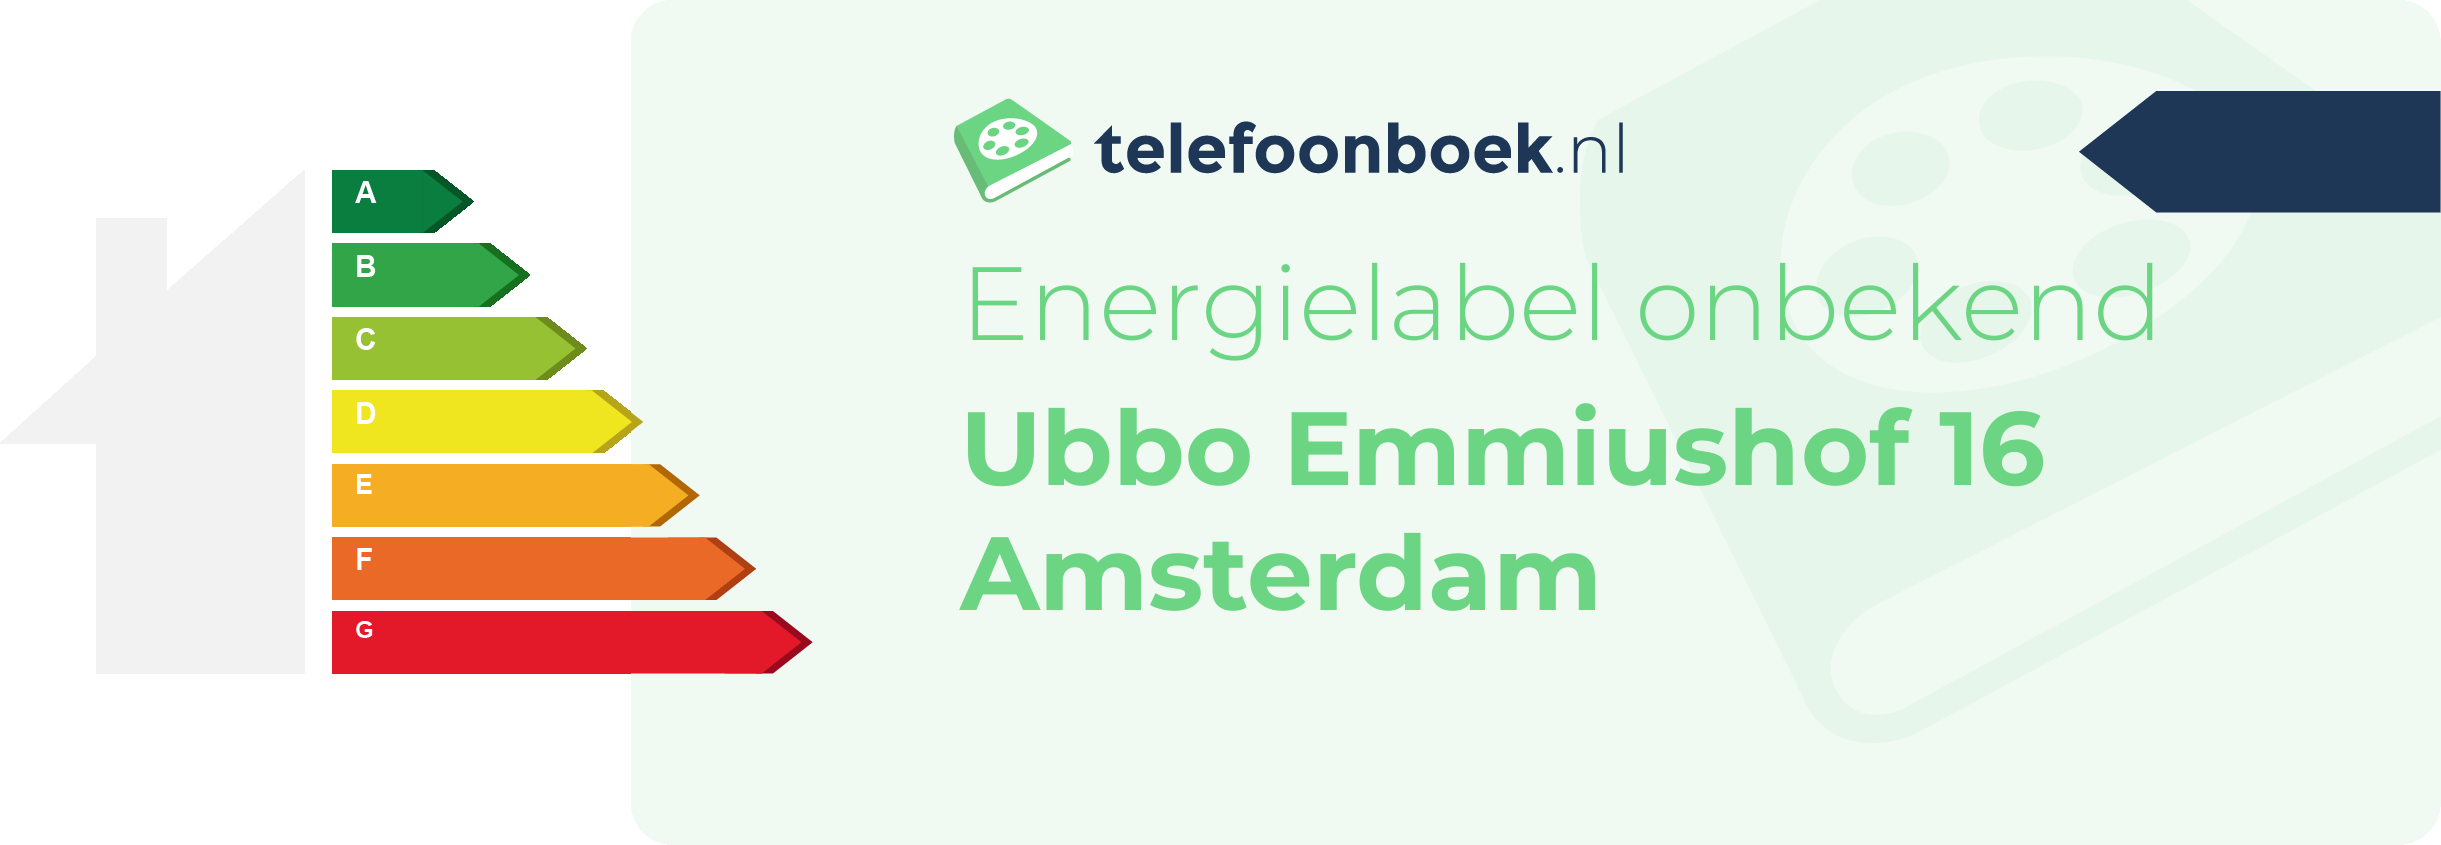 Energielabel Ubbo Emmiushof 16 Amsterdam